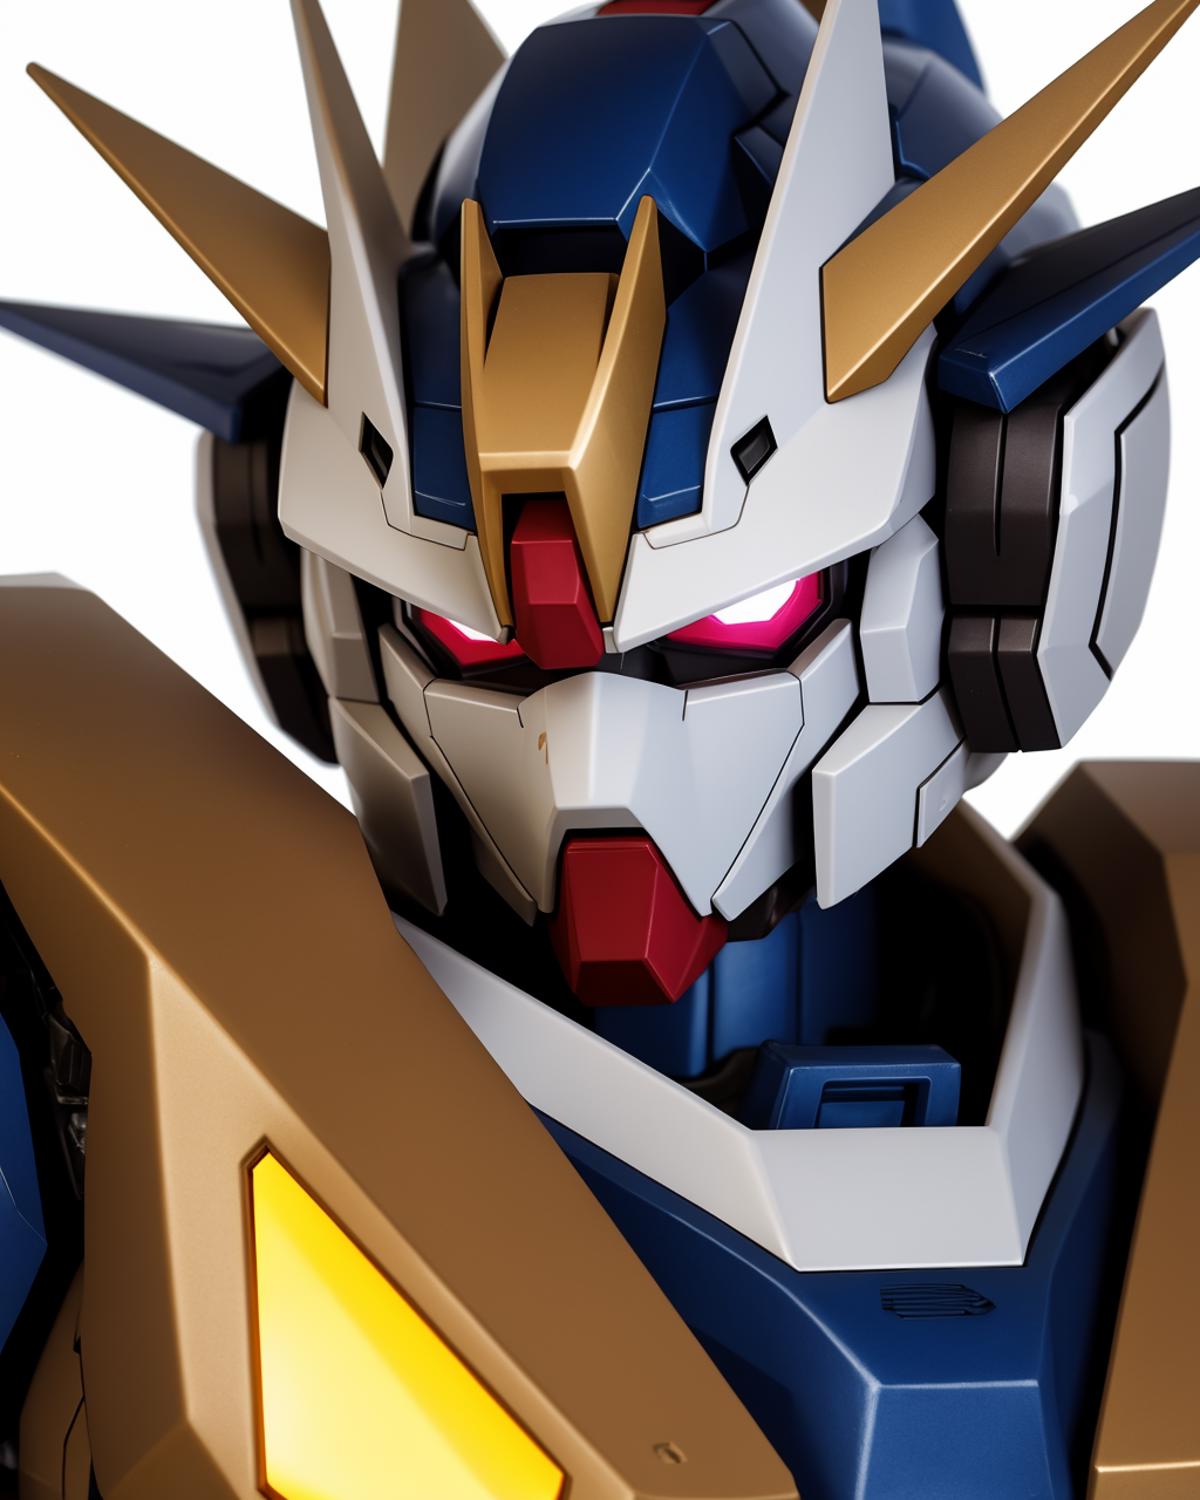 Gundam / Gunpla image by oosayam